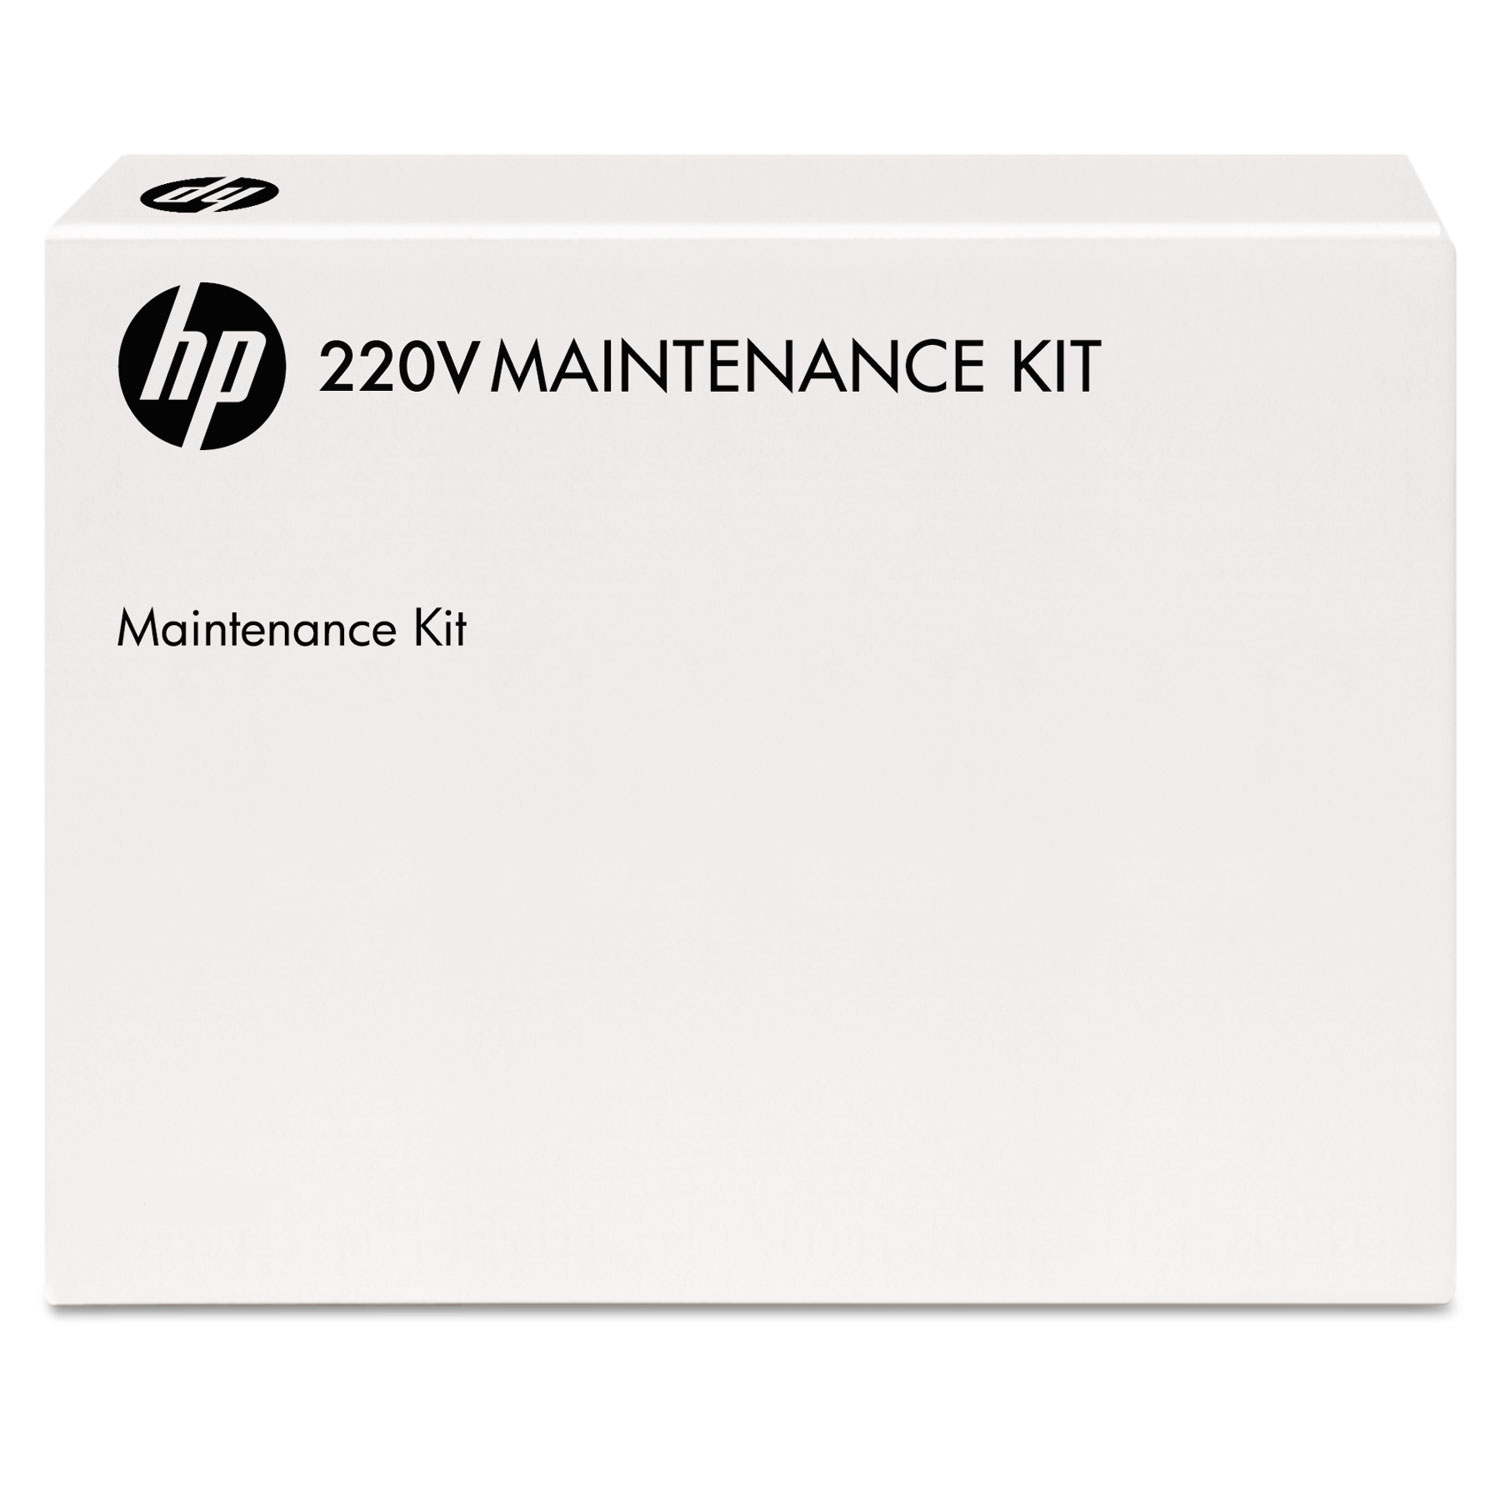 HP Maintenance Kit 220V 44-in.